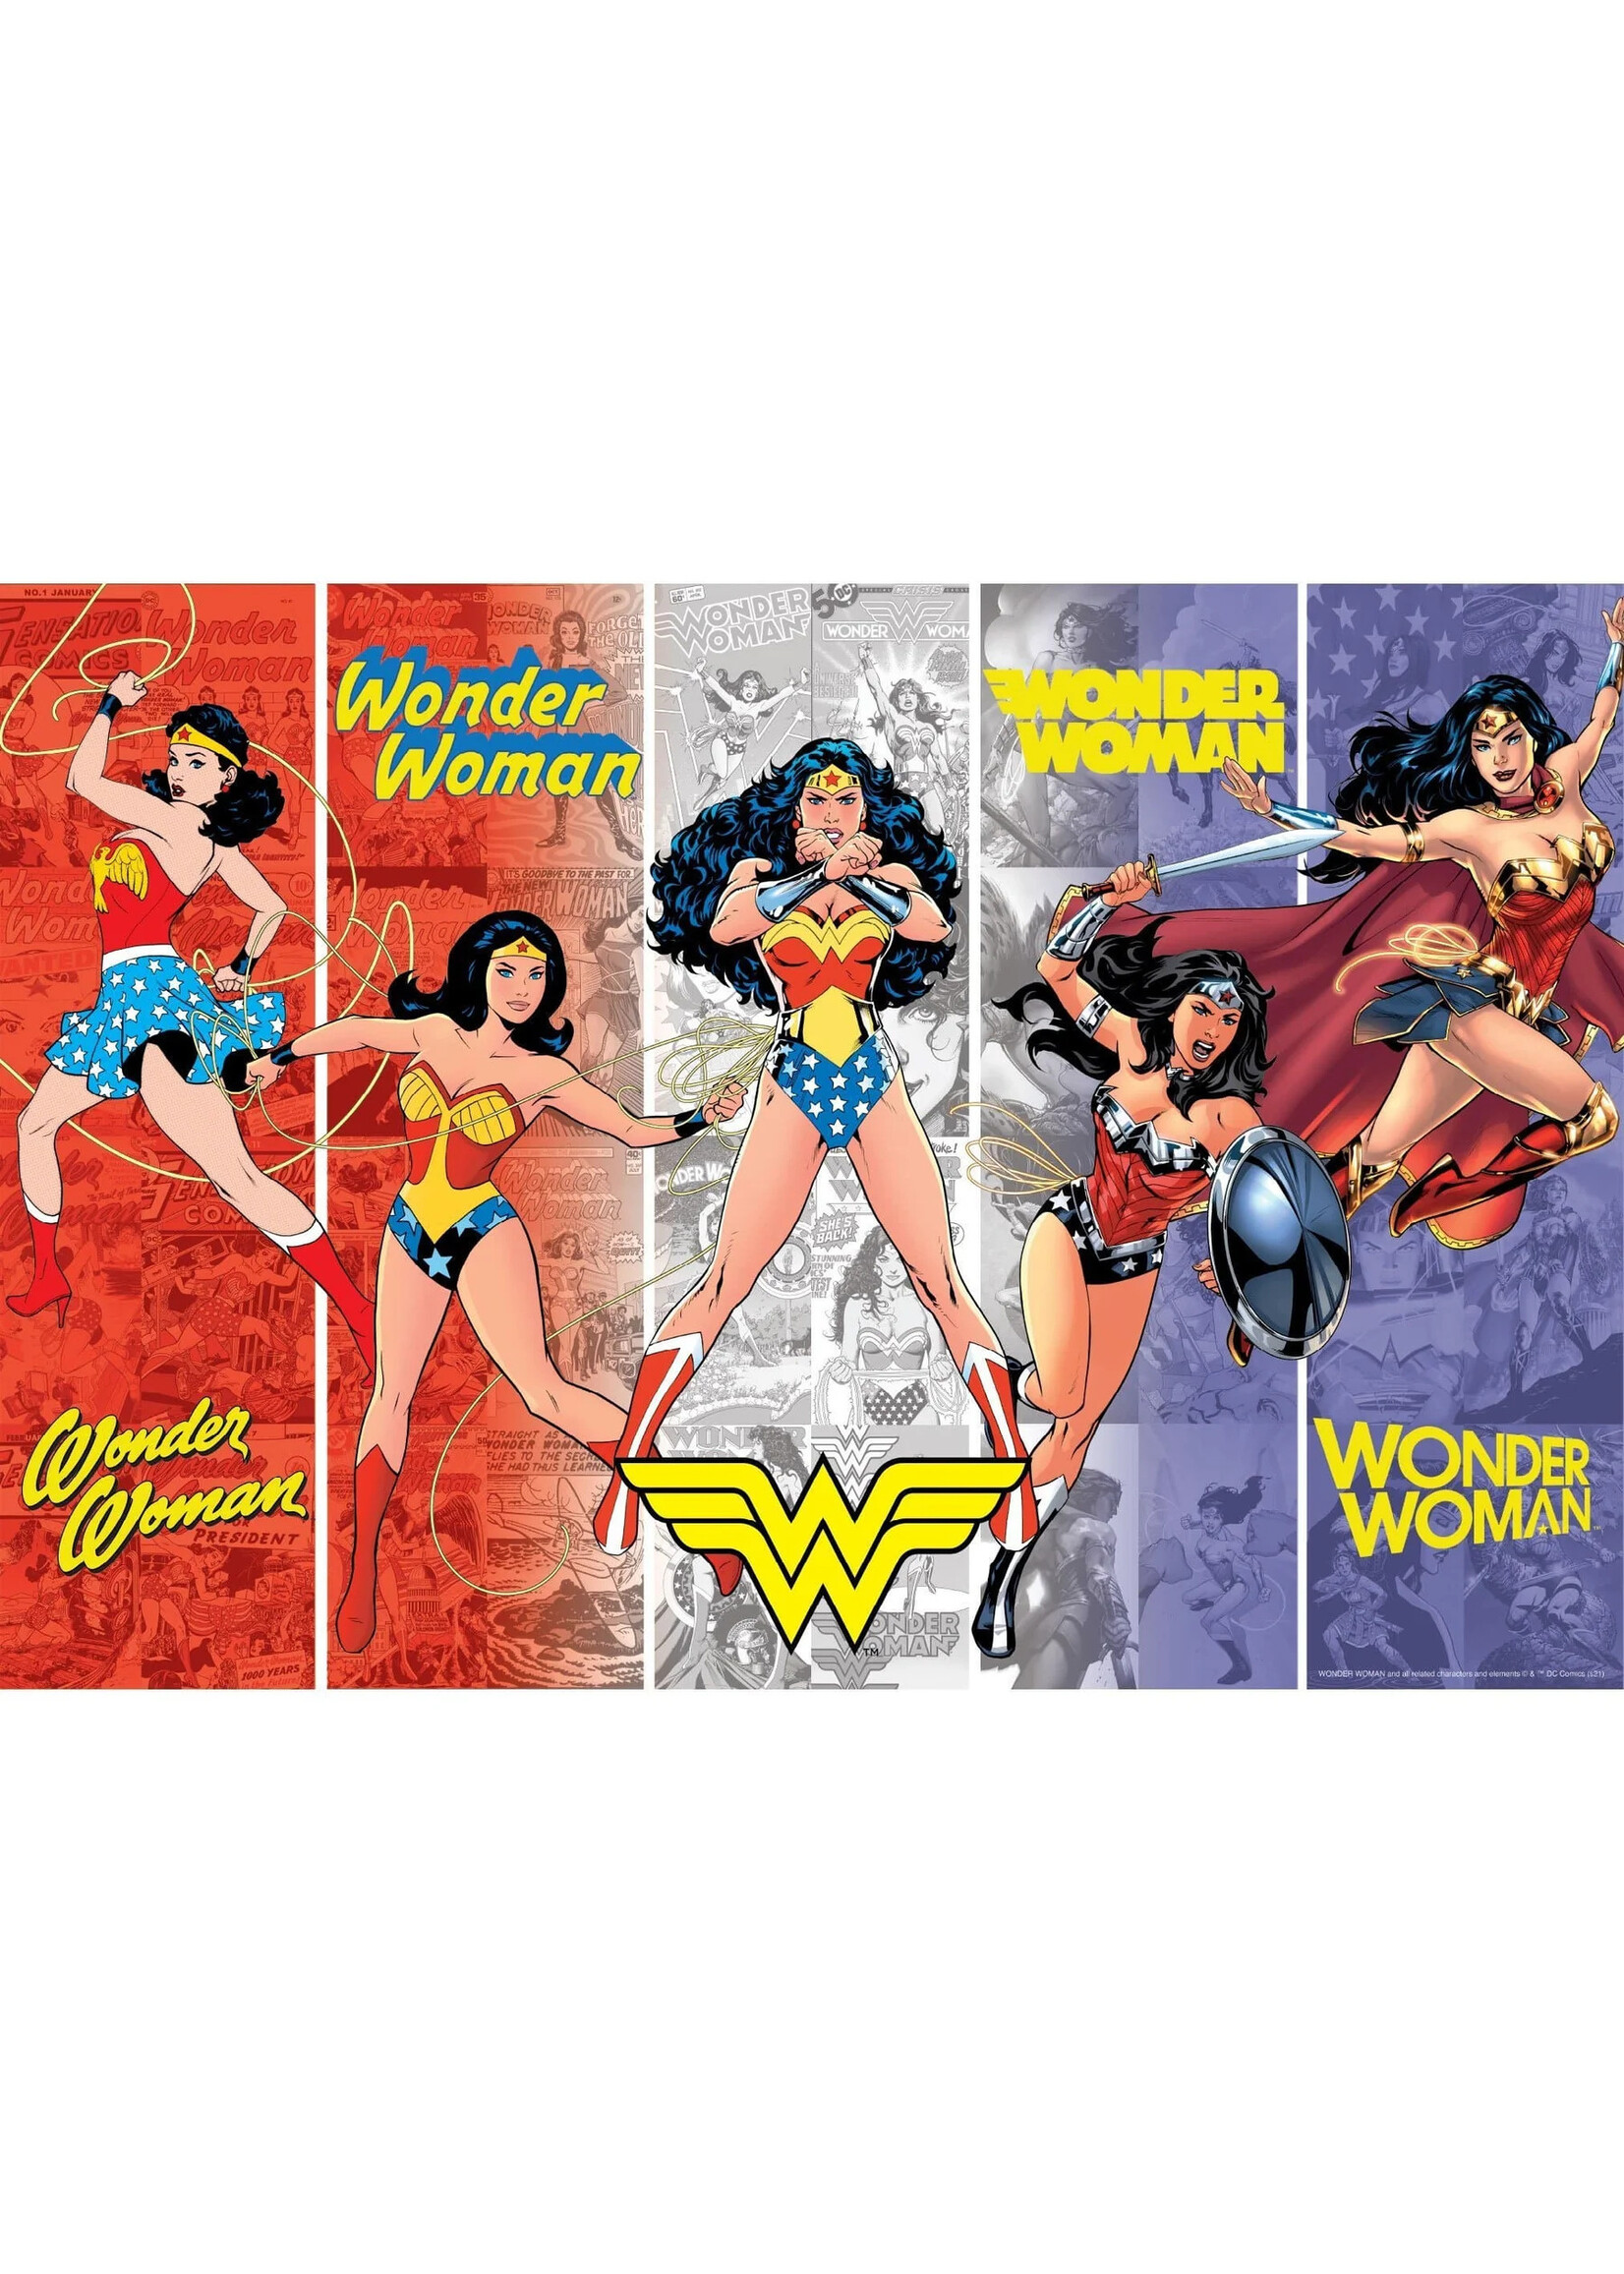 Paper house productions Wonder Woman Generations Puzzle